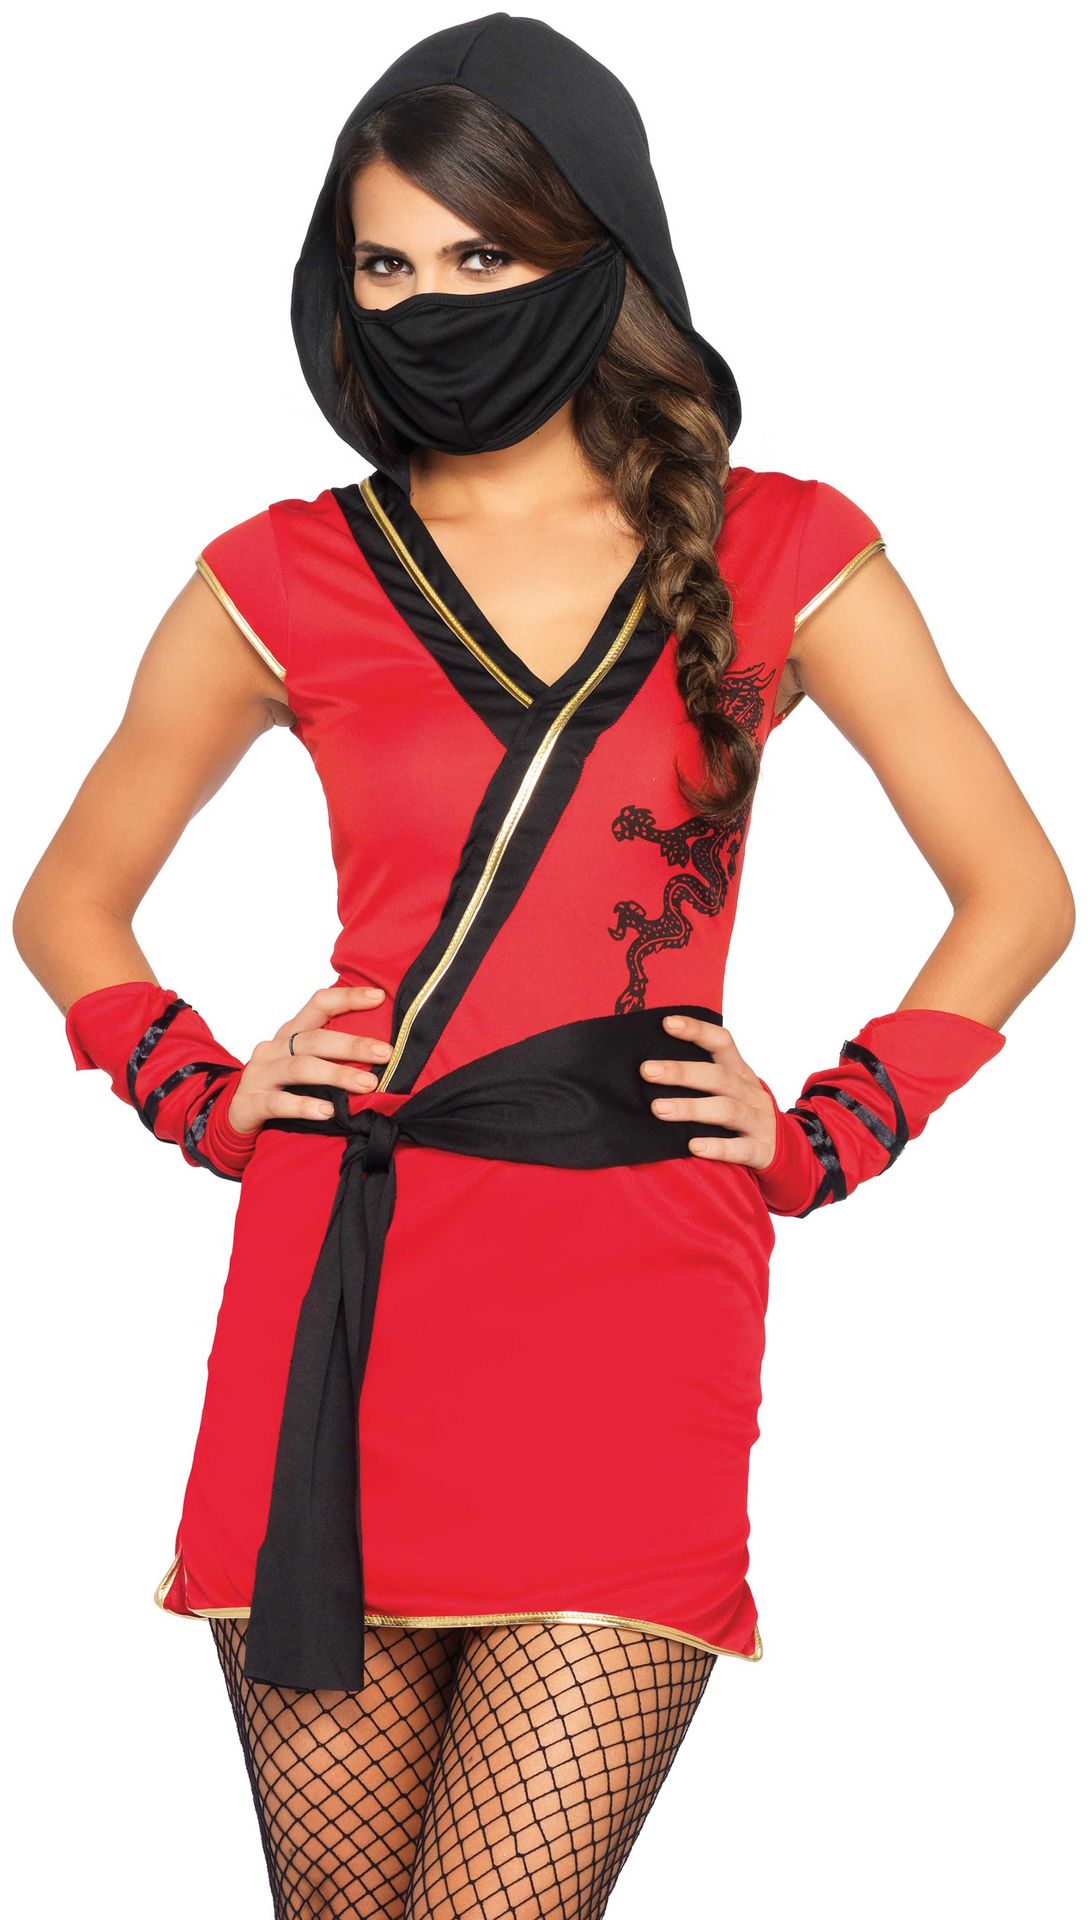 Ninja jurkje rood